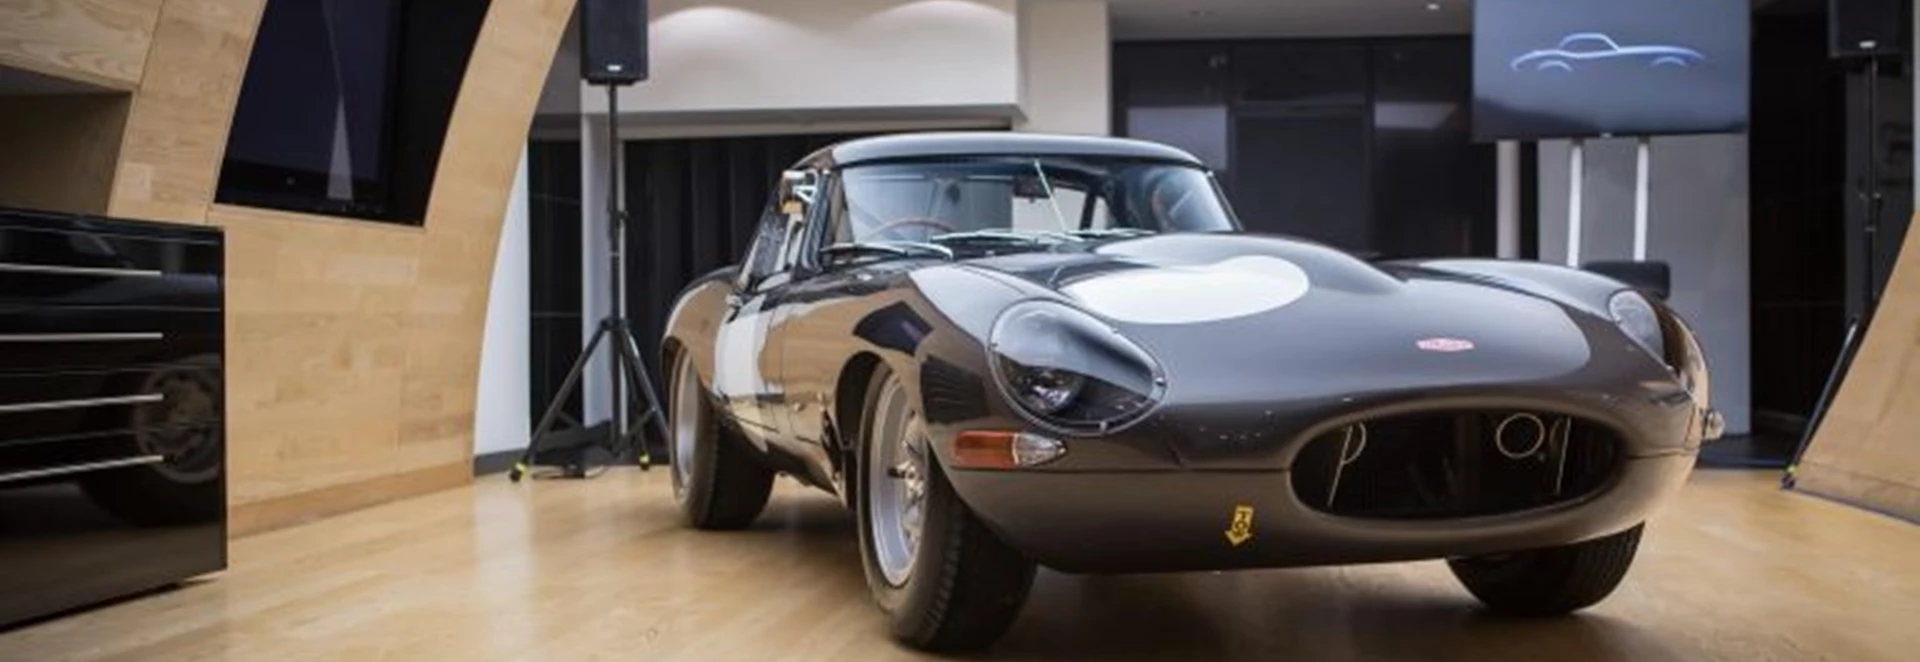 Stratstone purchases ultra-rare Jaguar Lightweight E-type